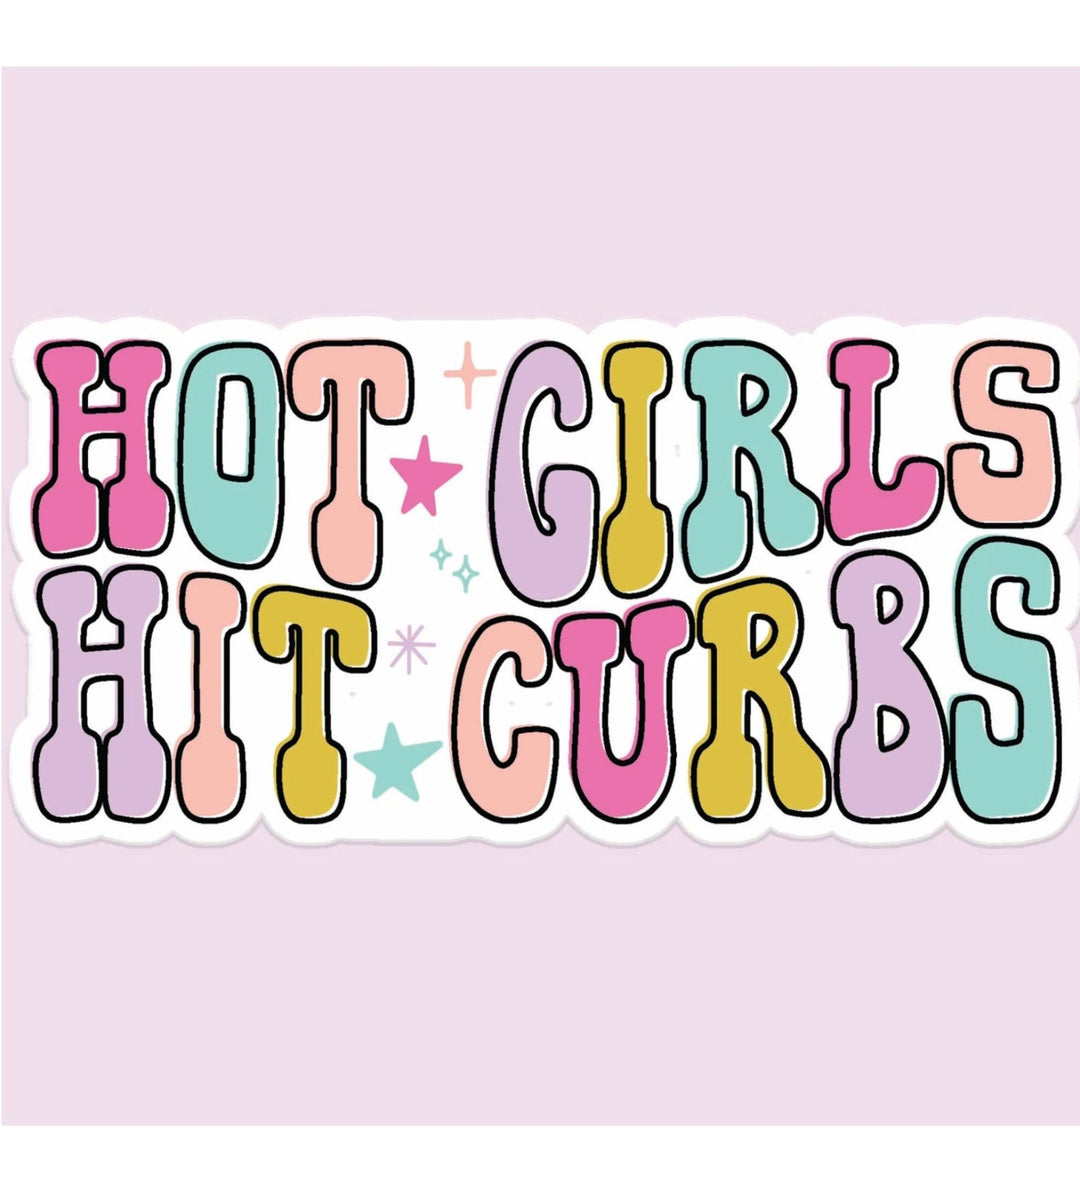 Hot Girls Hit Curbs Stickers